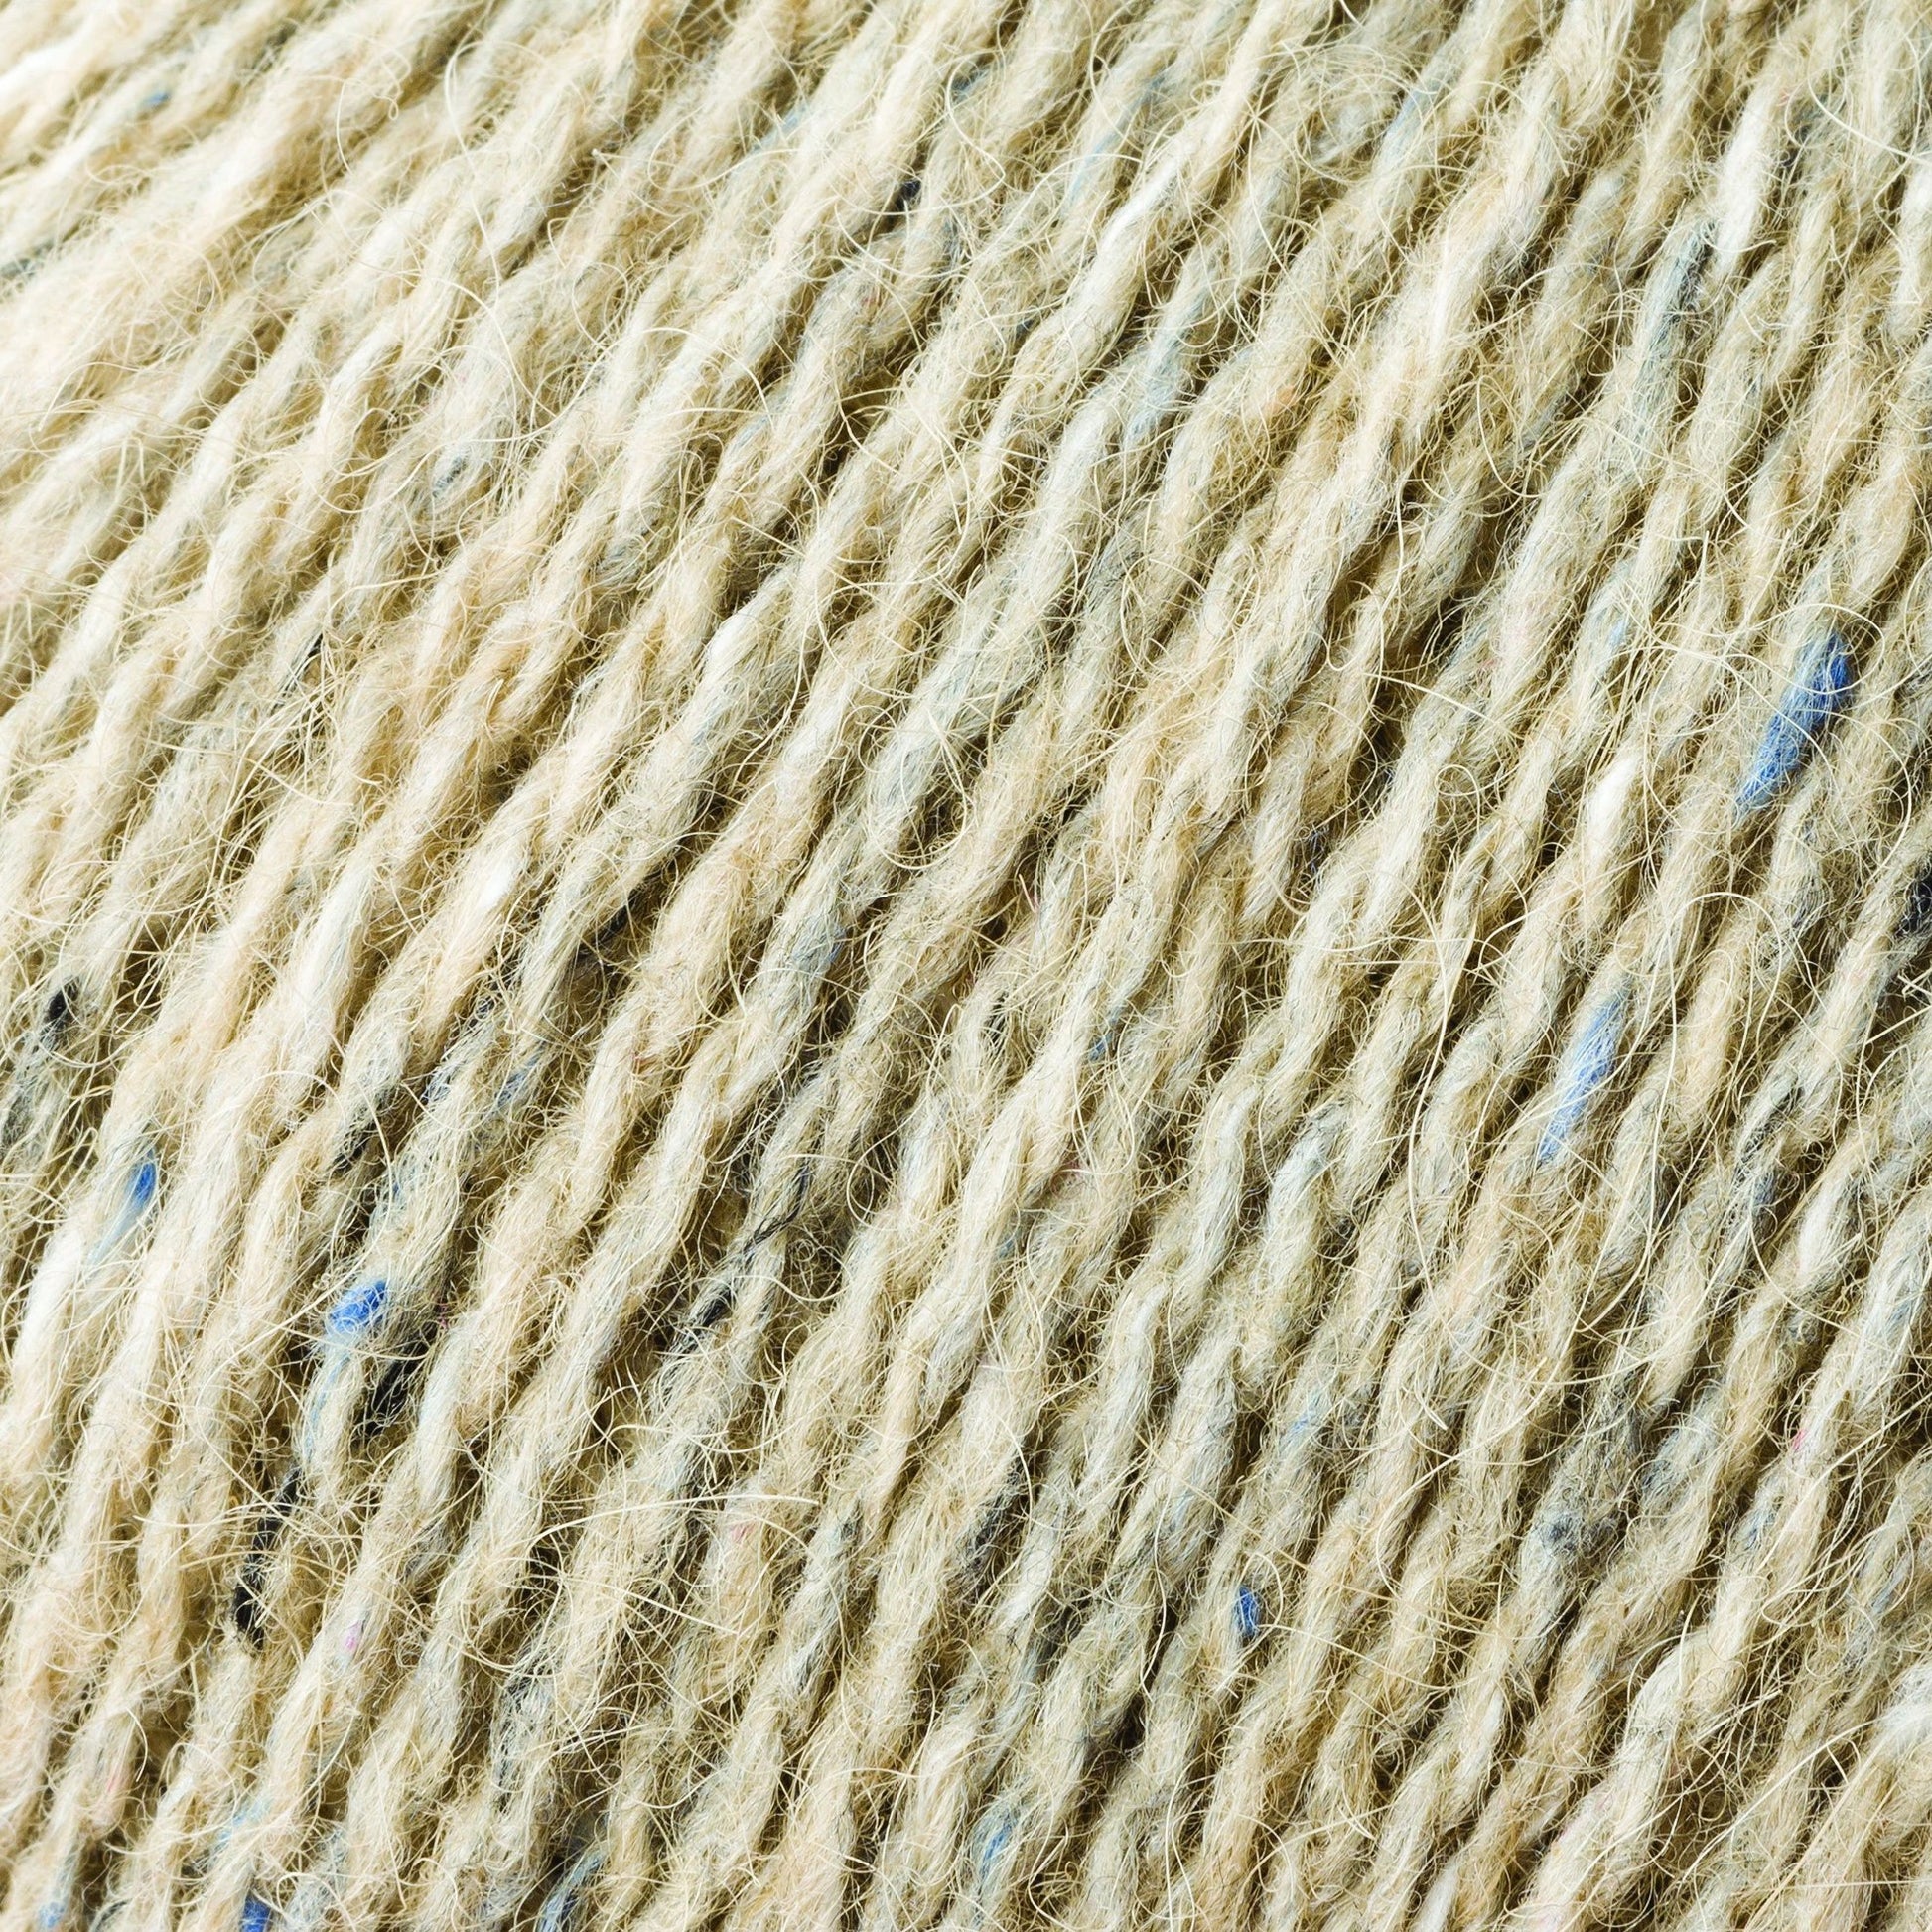 Stone 190 - pale yellow-brown tweed